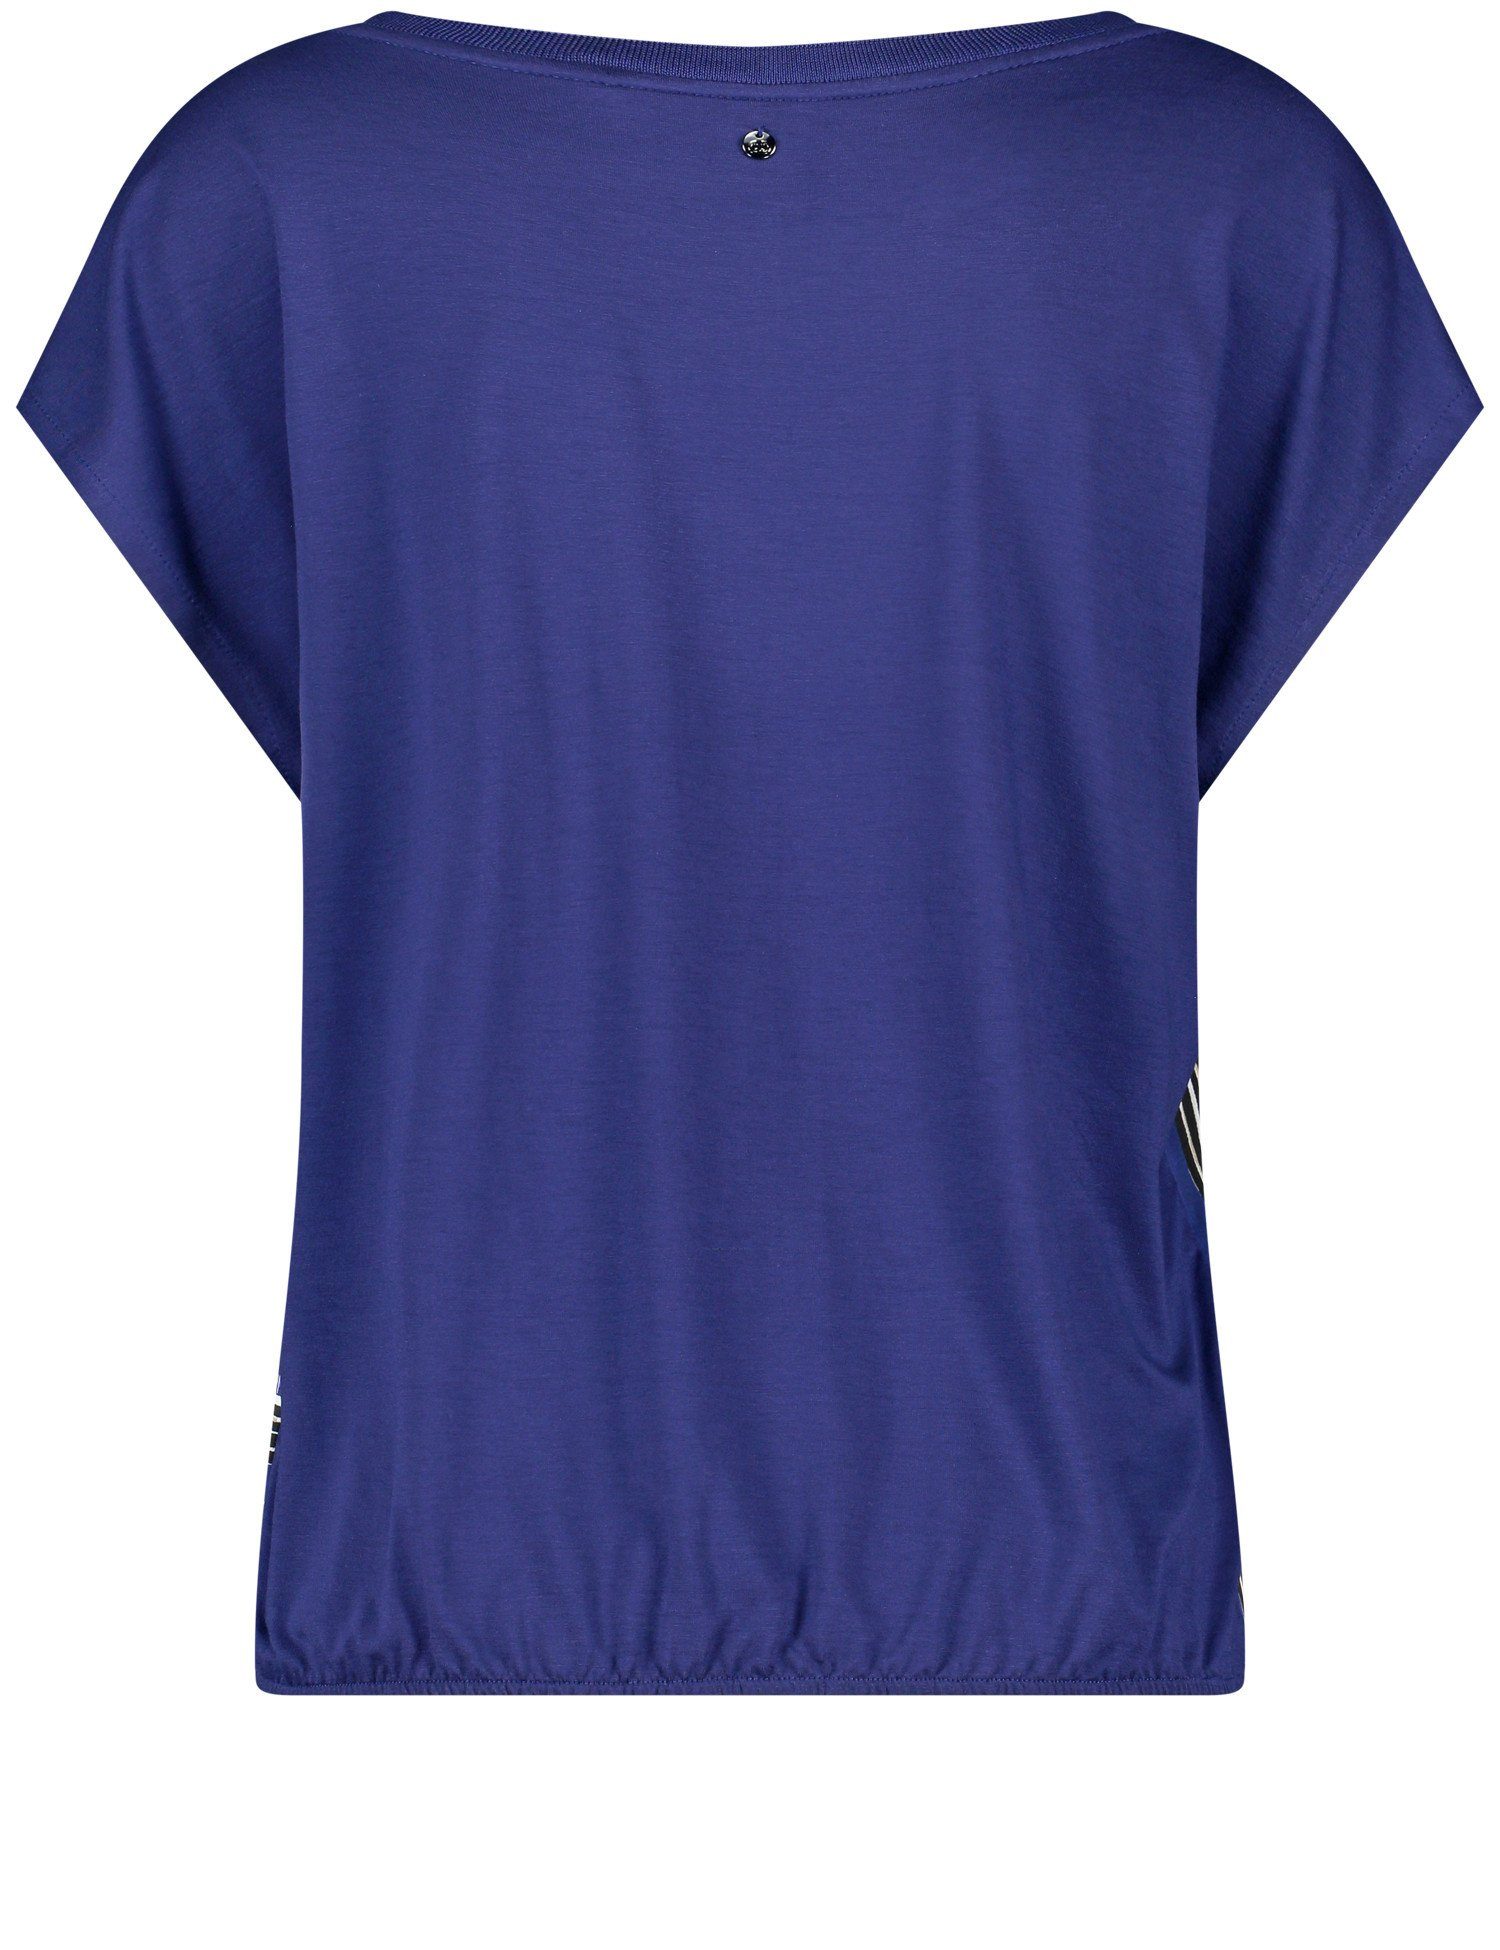 Kurzarmshirt GERRY mit elastischem Blau/Lila/Pink Saum WEBER Druck Blusenshirt